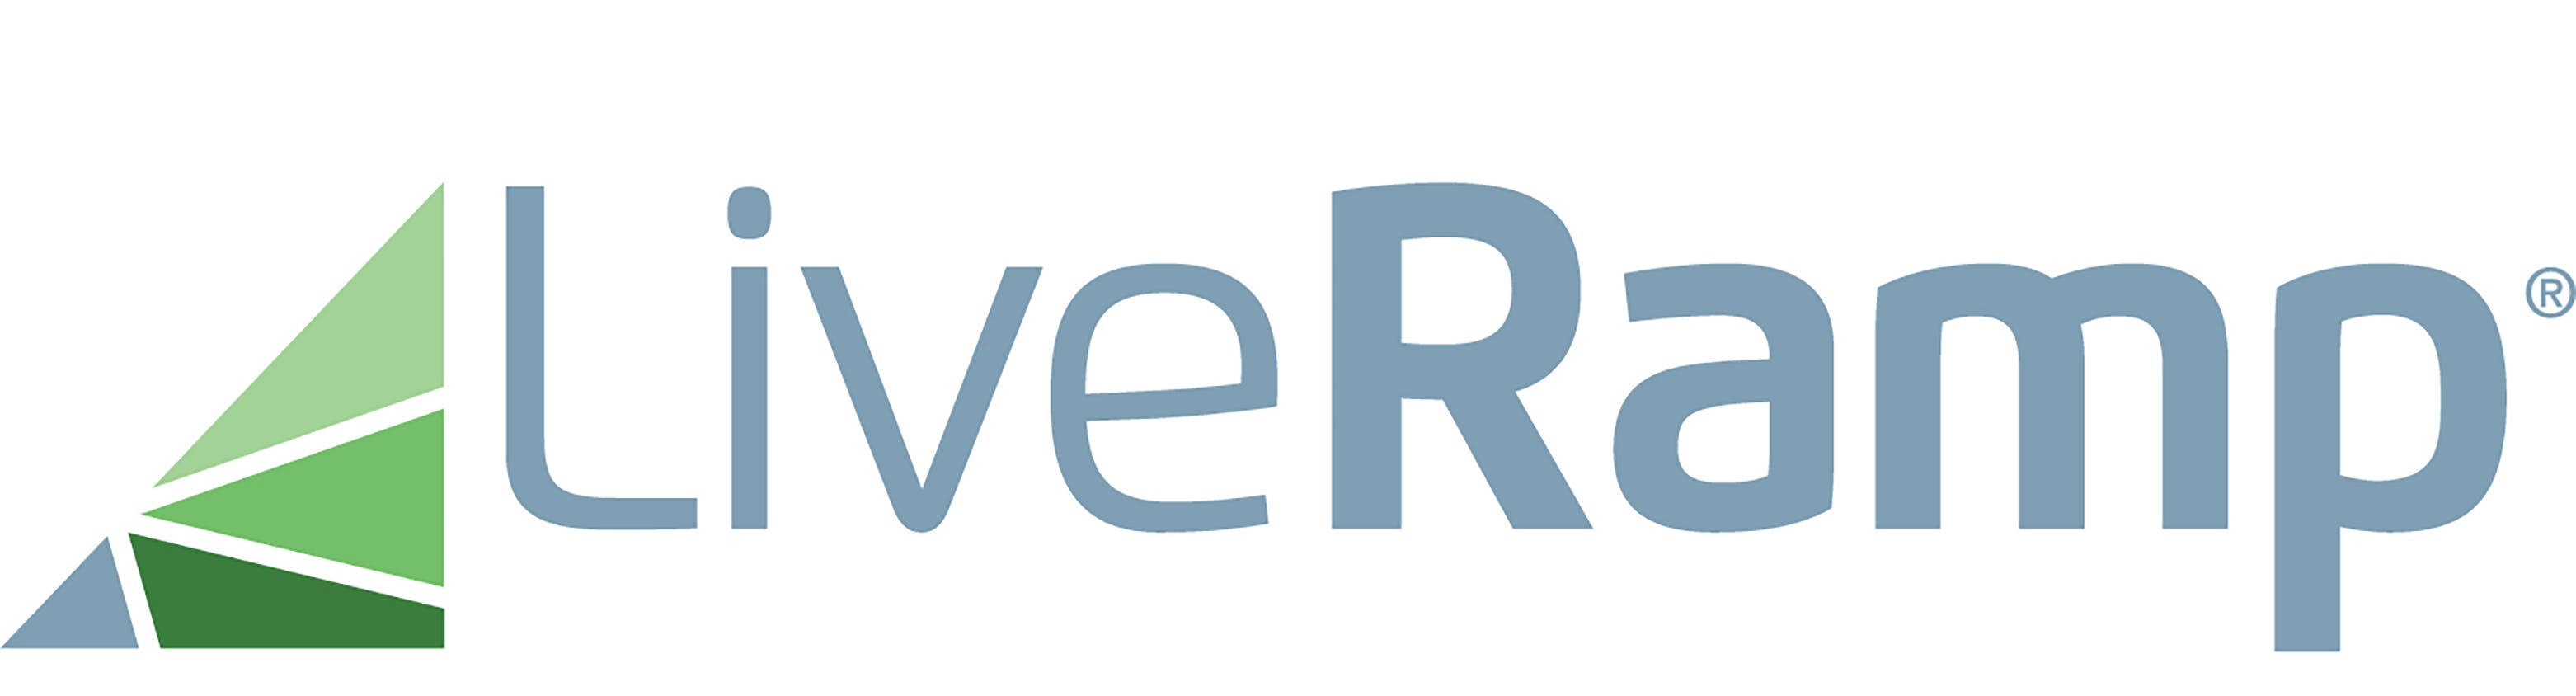 LiveRamp - Partners - LiveRamp